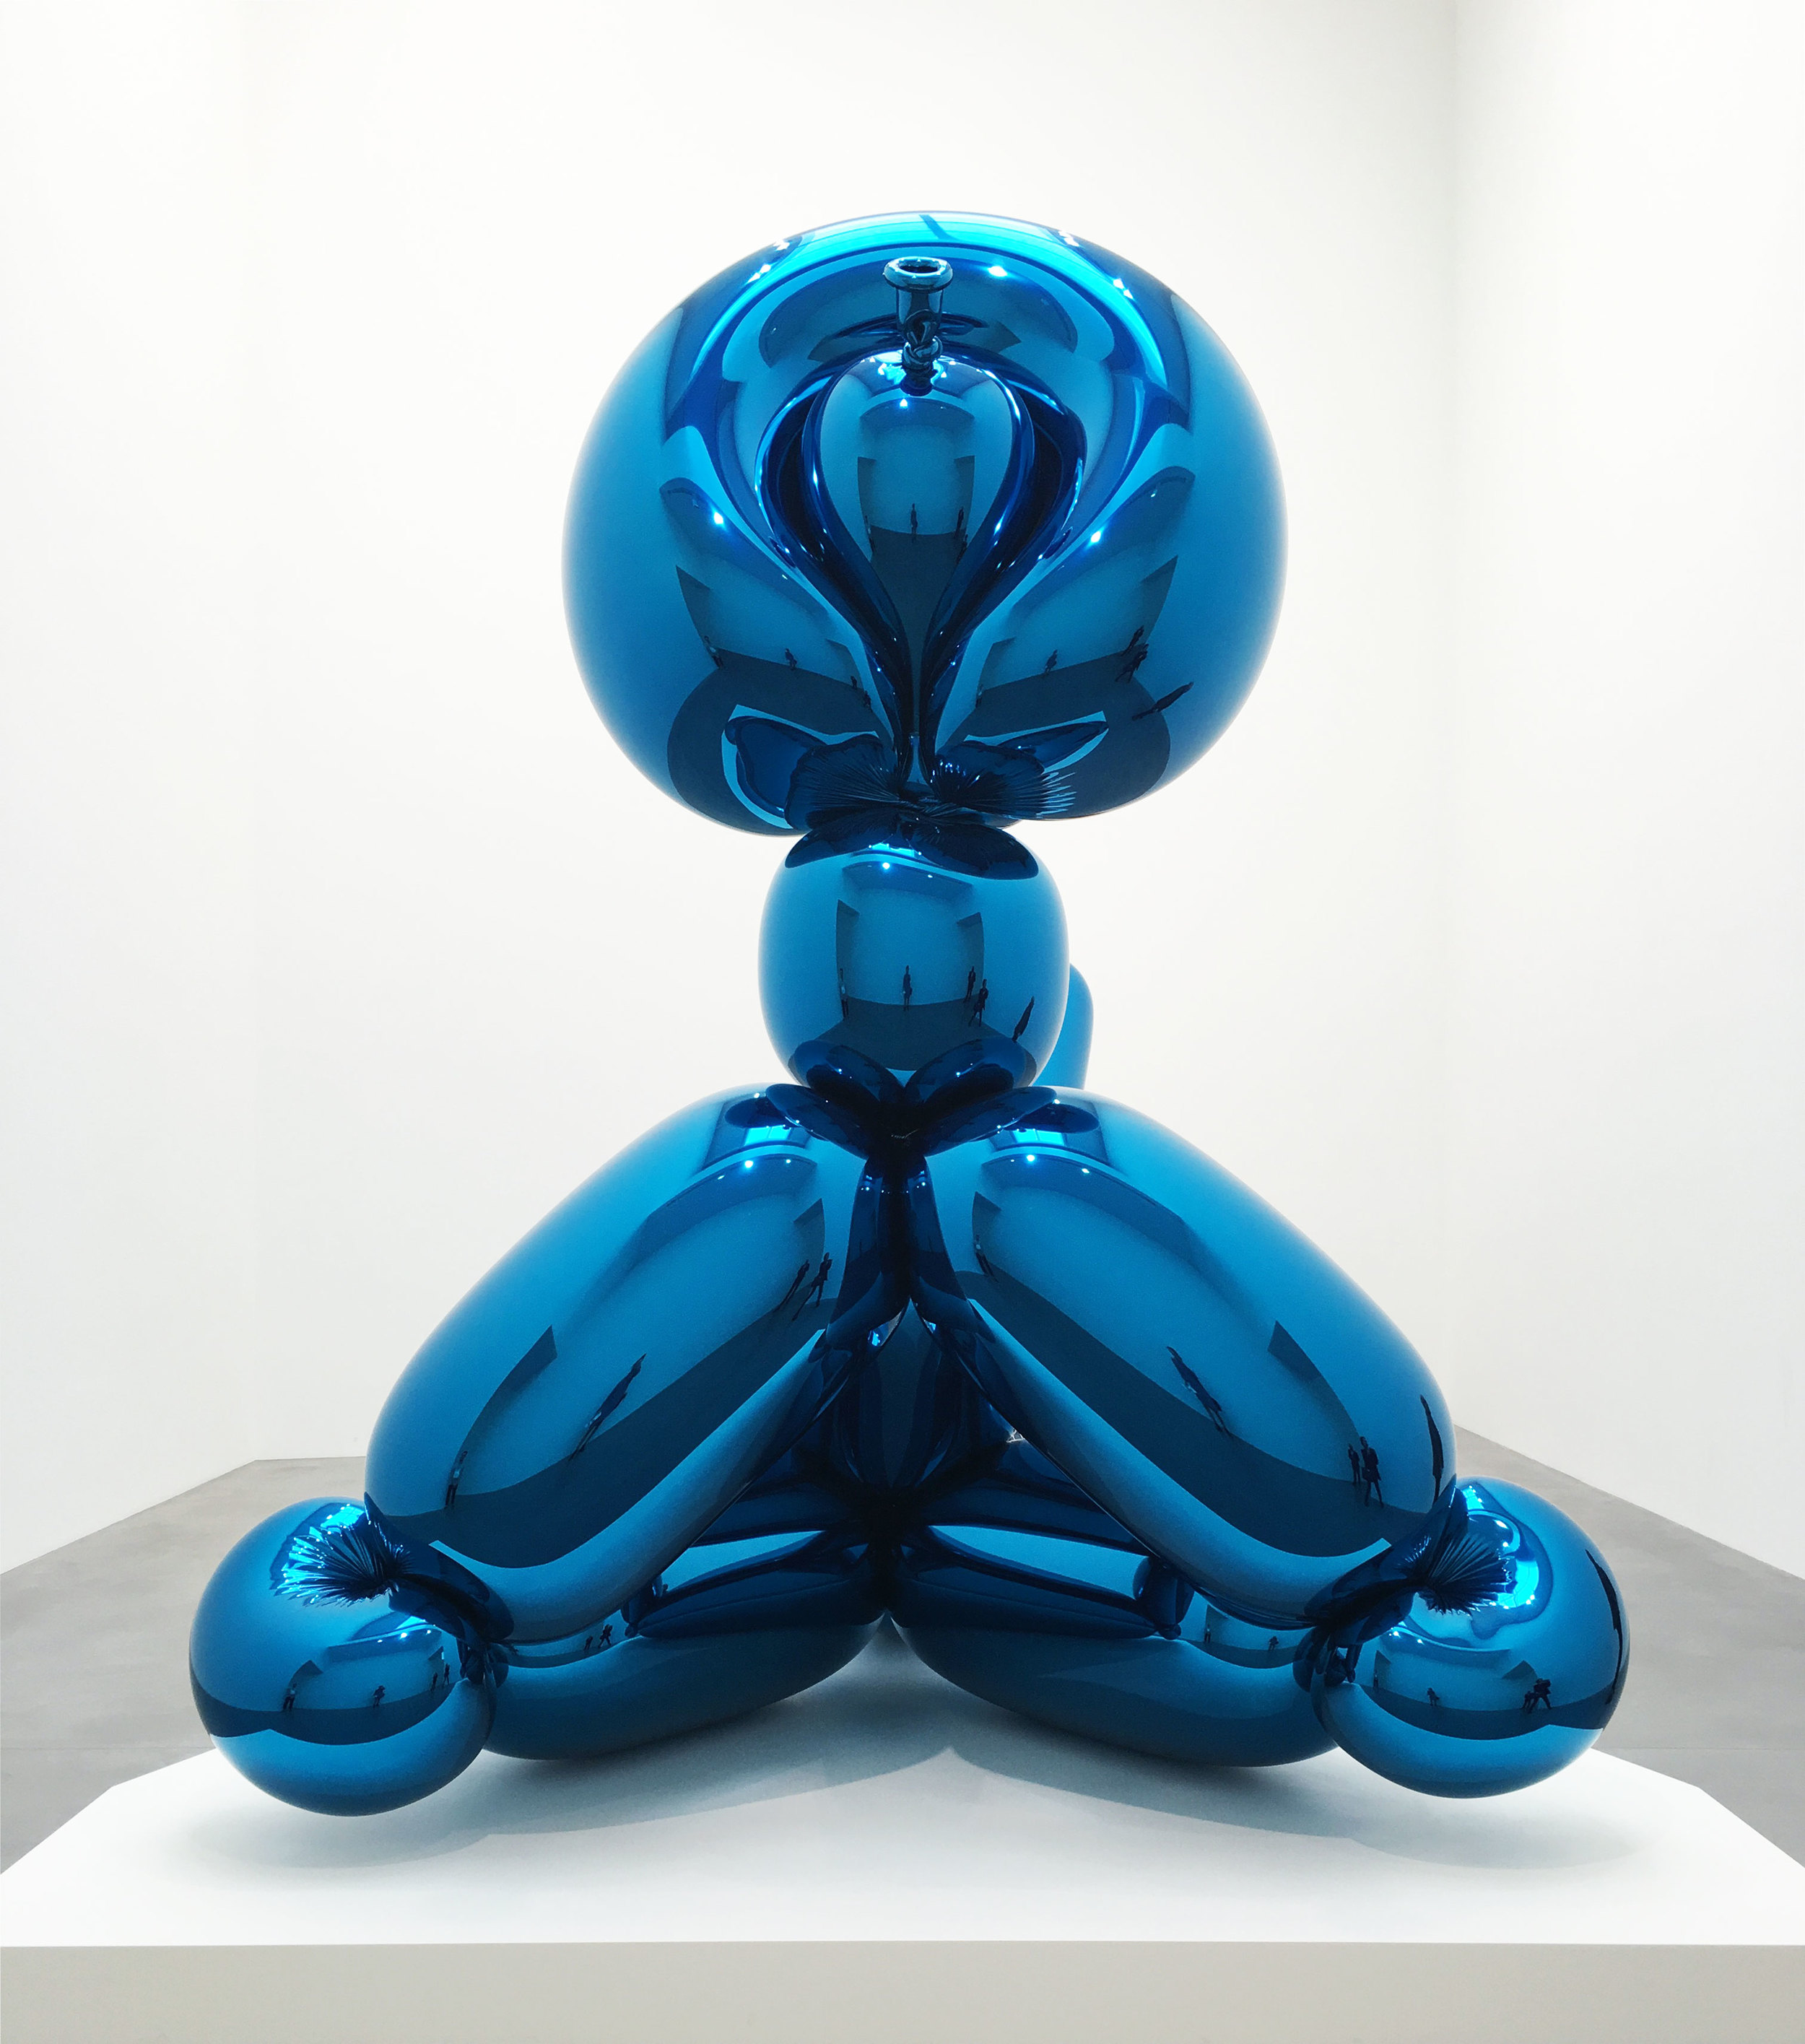 Jeff-Koons_Balloon_Damien-Hirst_Newport-street-gallery_AnnaVP_front_.jpg